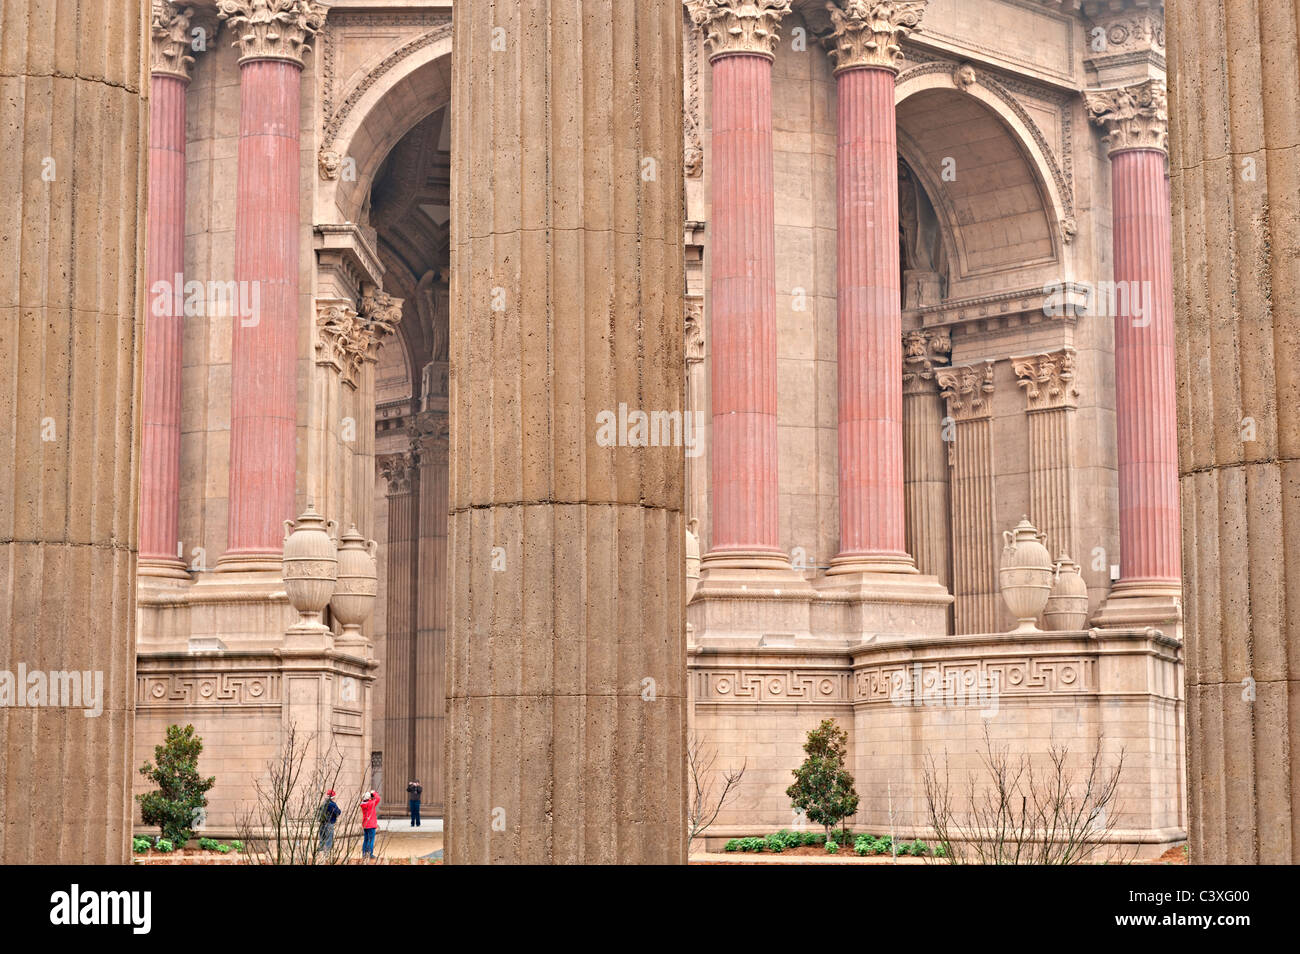 Palace of Fine Arts central rotunda, viewed through the fluted columns of the encircling pergola, San Francisco, California. Stock Photo